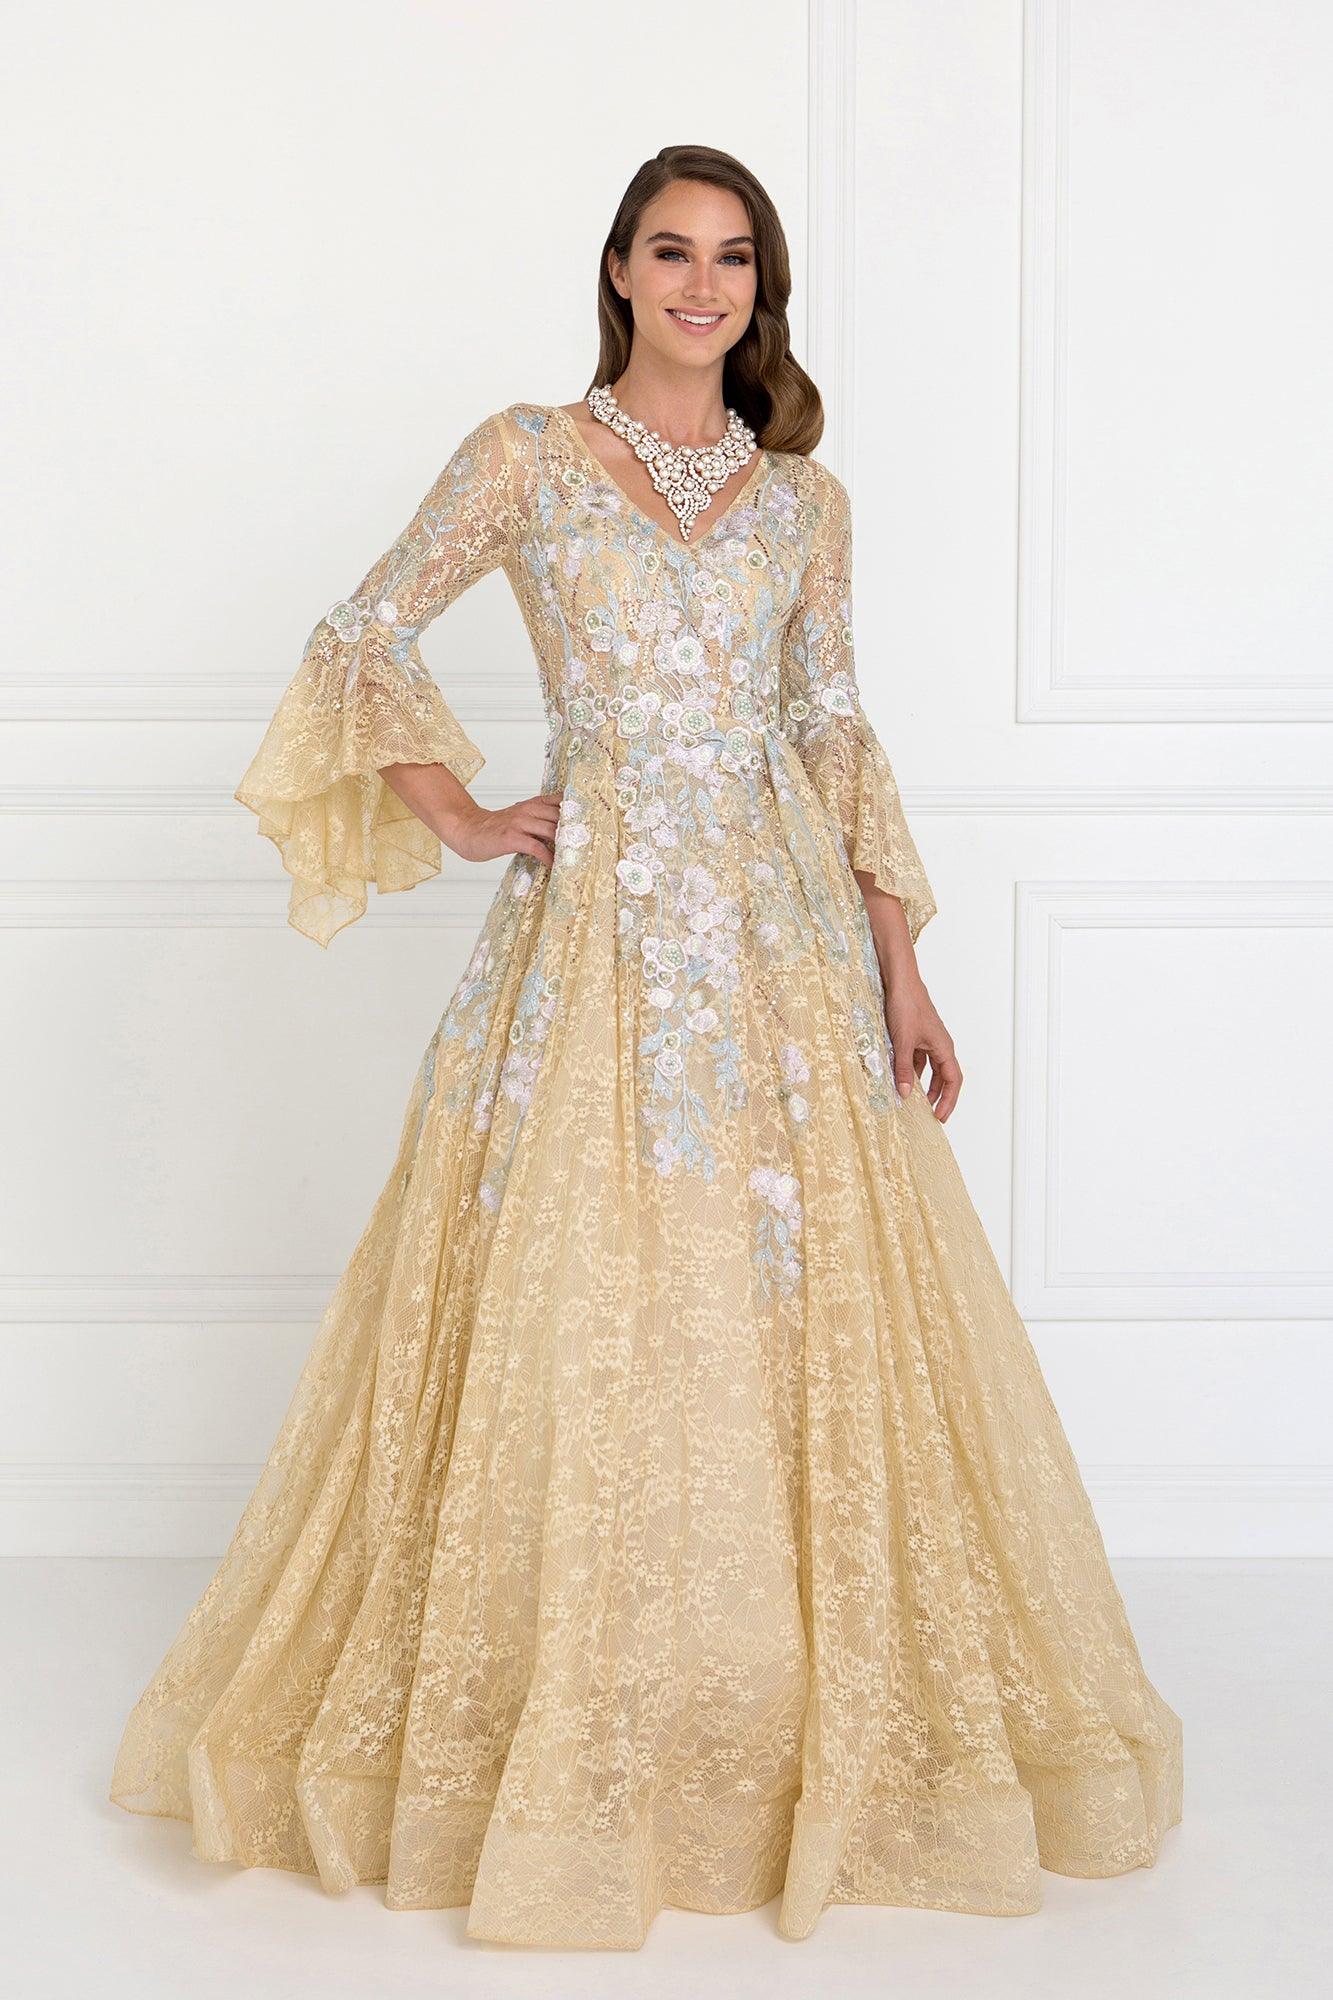 Prom Long Dress Formal Ball Gown - The Dress Outlet Elizabeth K